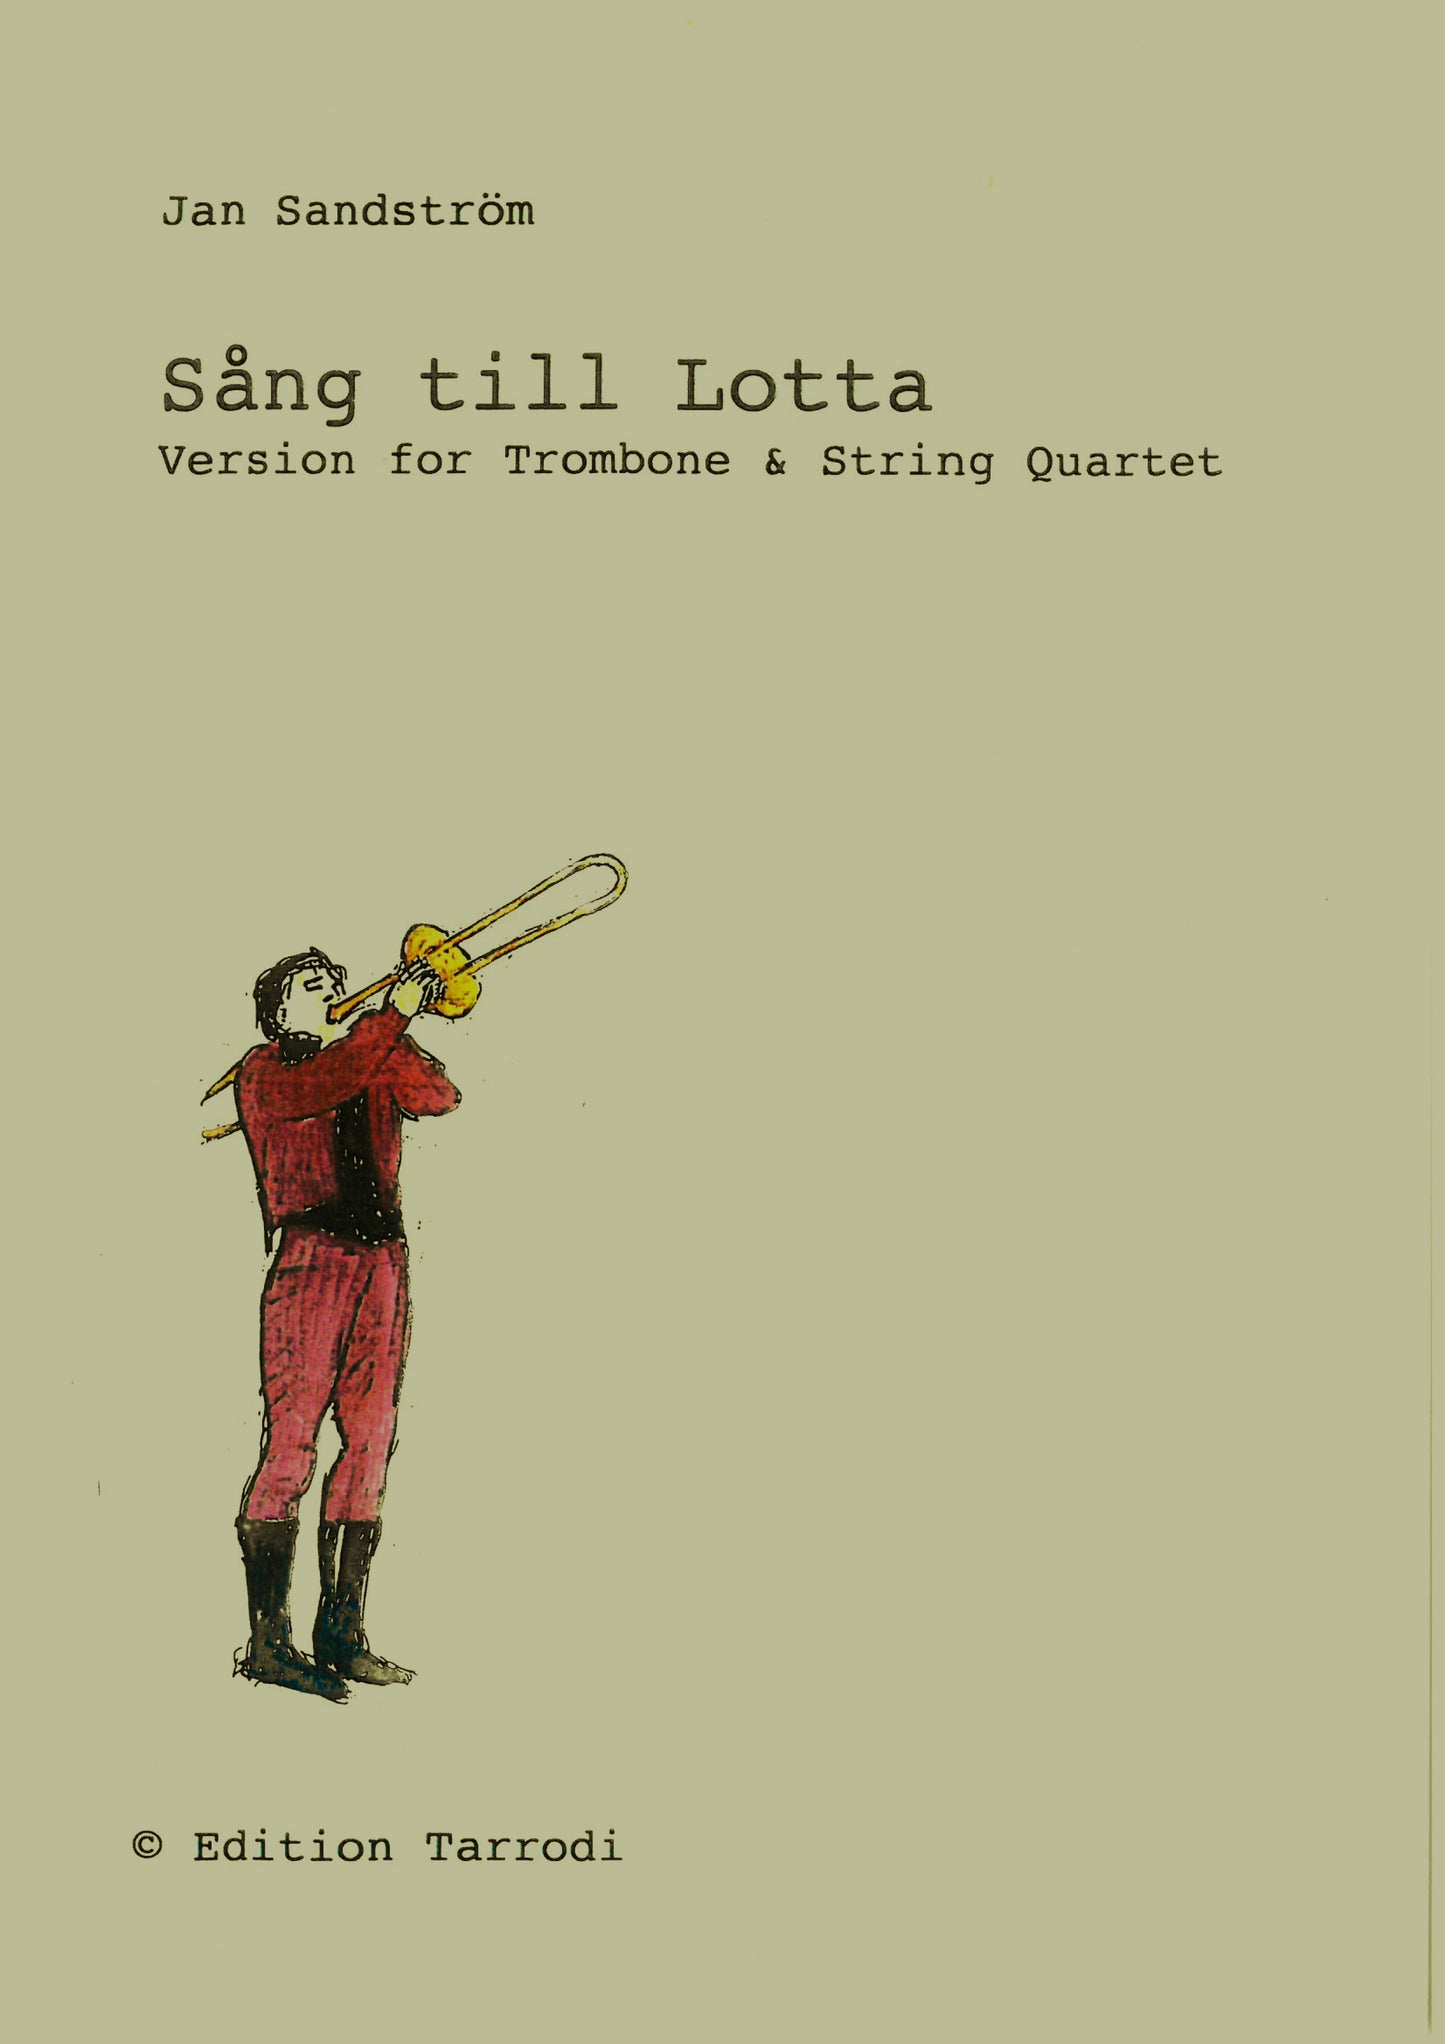 Jan Sandström - Song to Lotta in Bb, Trombone & String Quartet